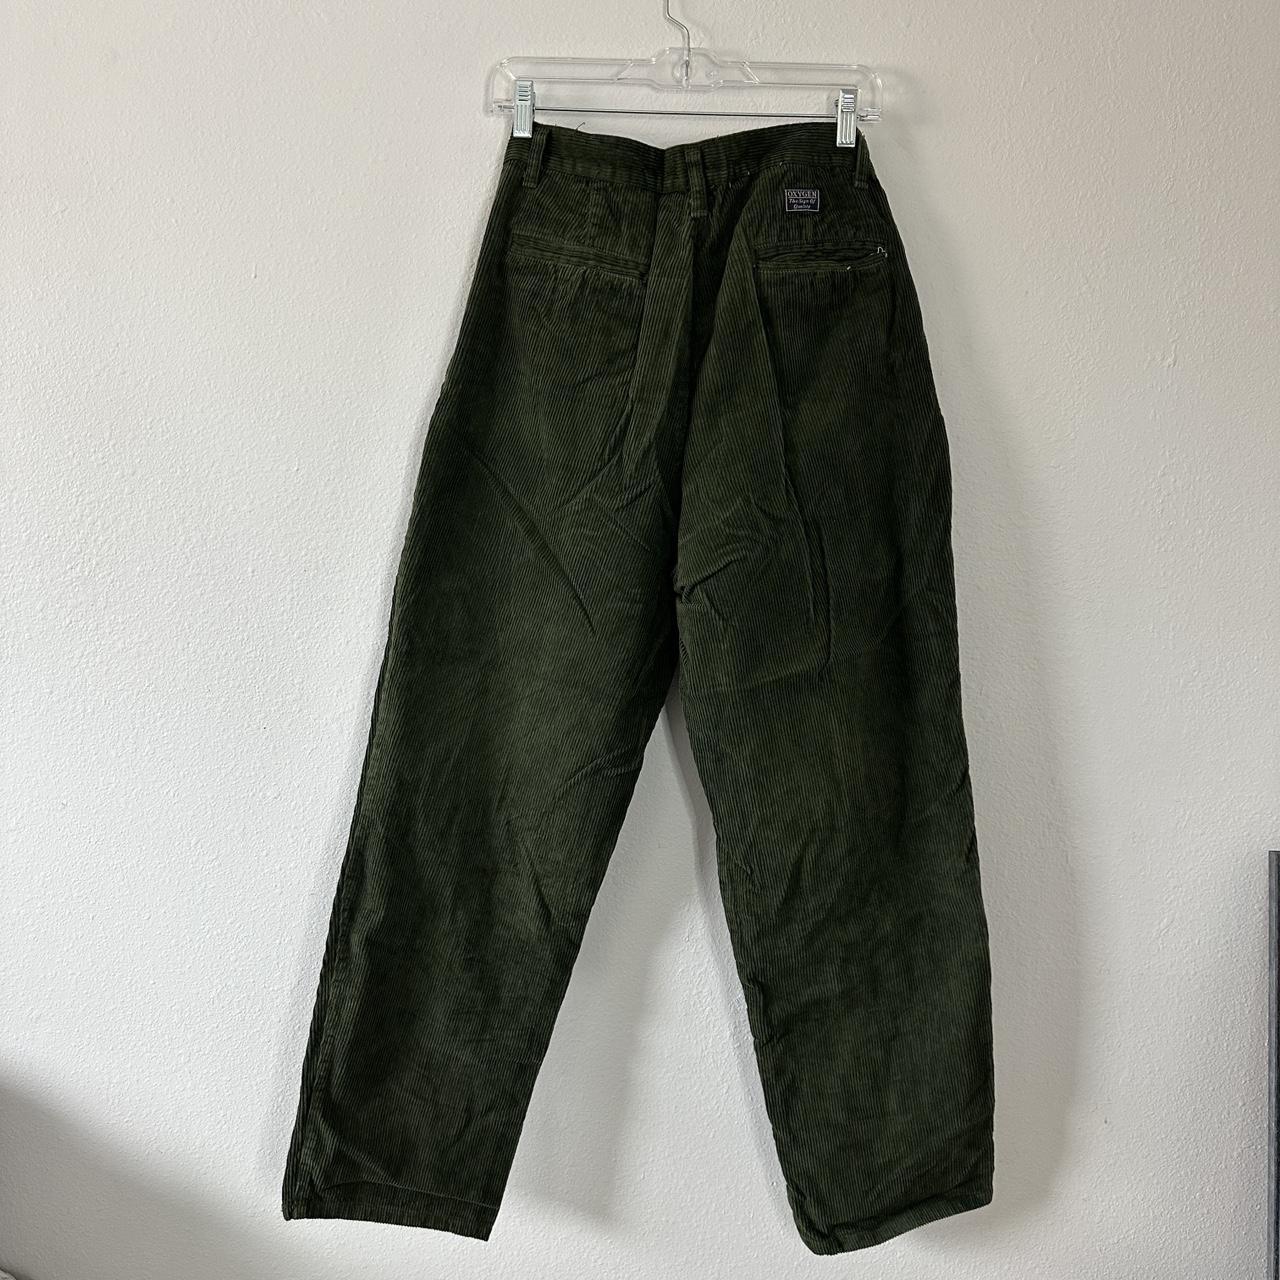 Vintage Green “Oxygen brand” Cordaroy pants.... - Depop